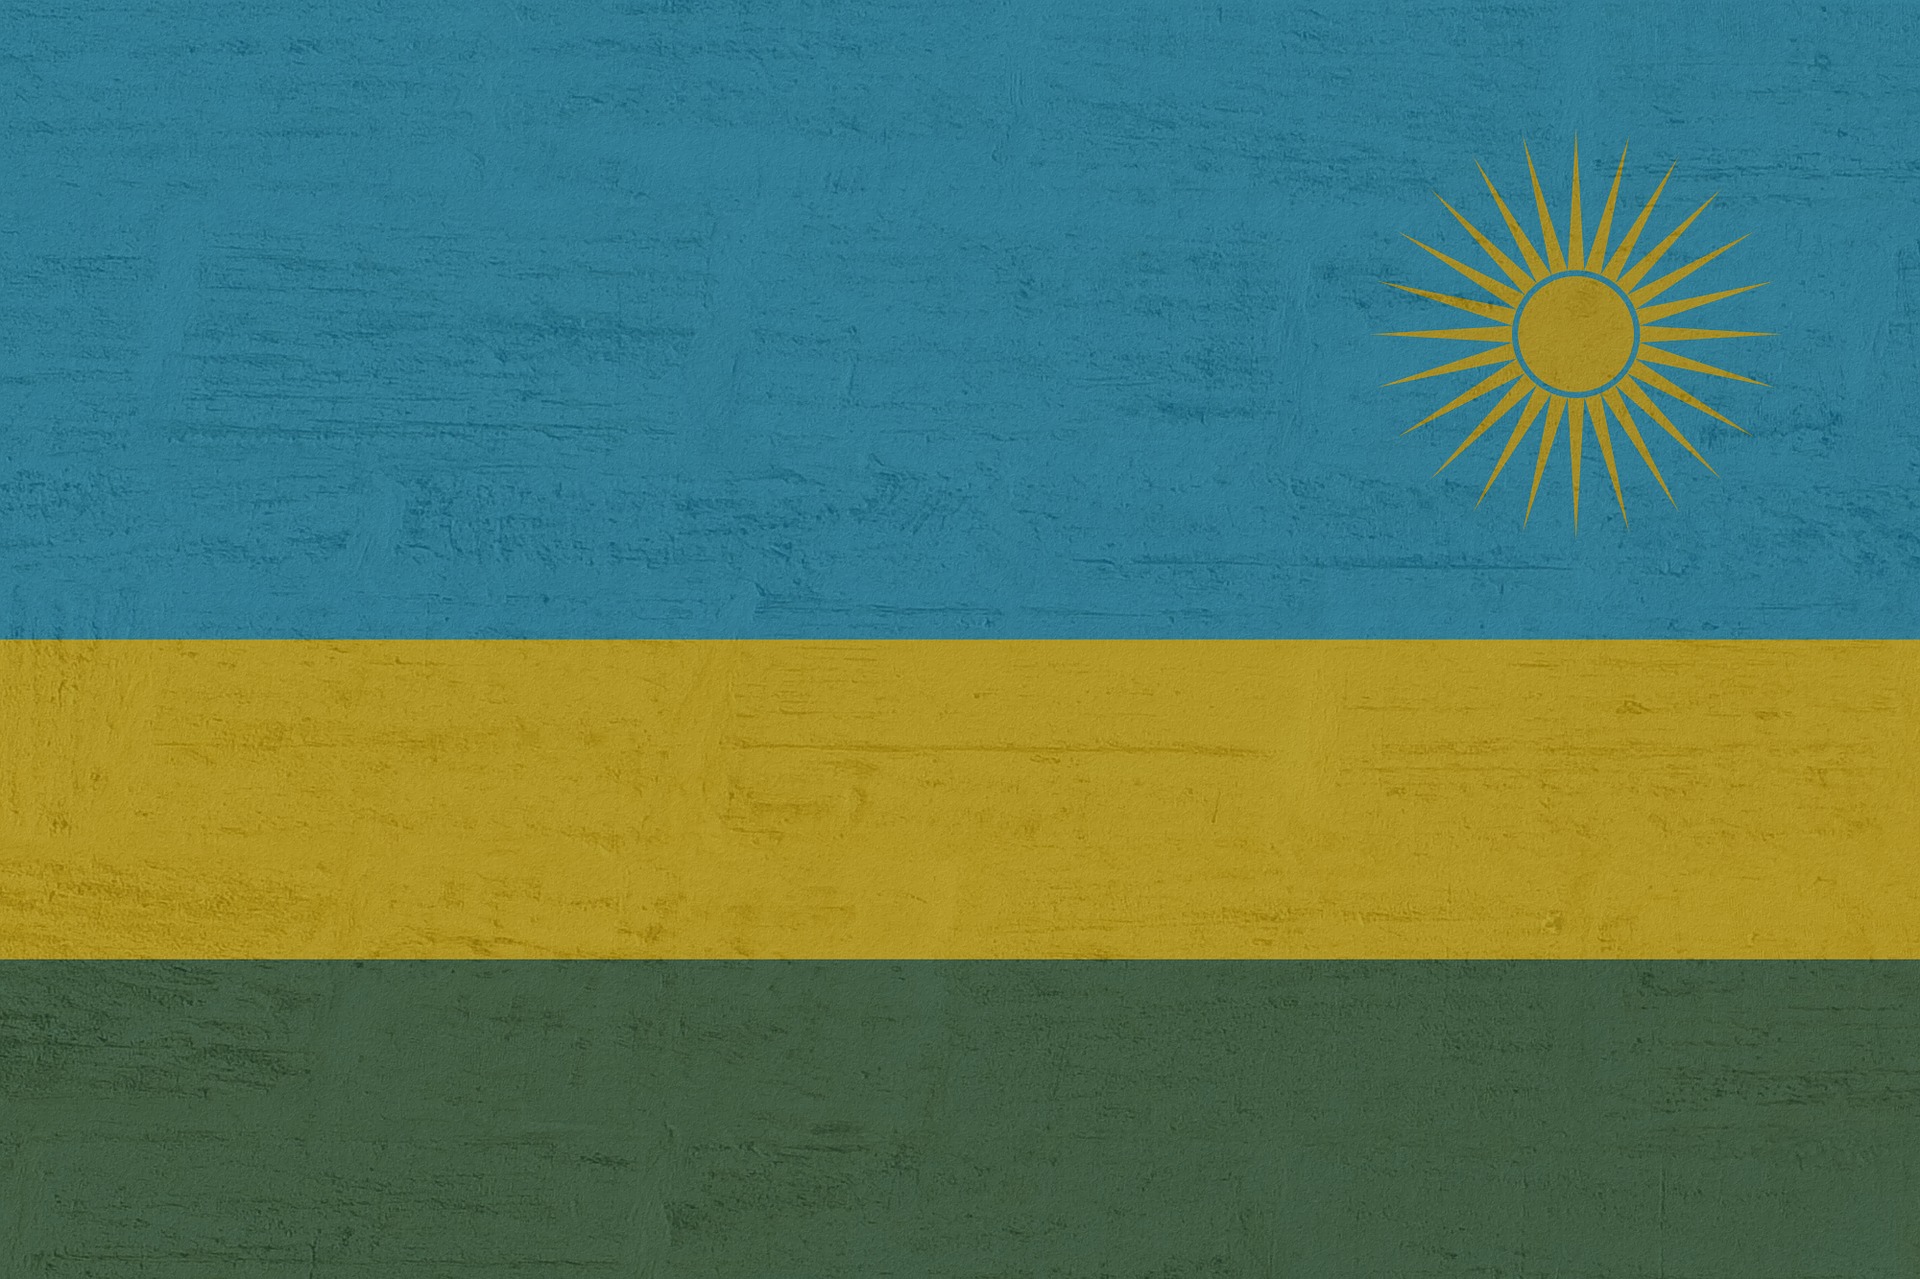 Tax Evasion Most Prevalent Financial Crime in Rwanda